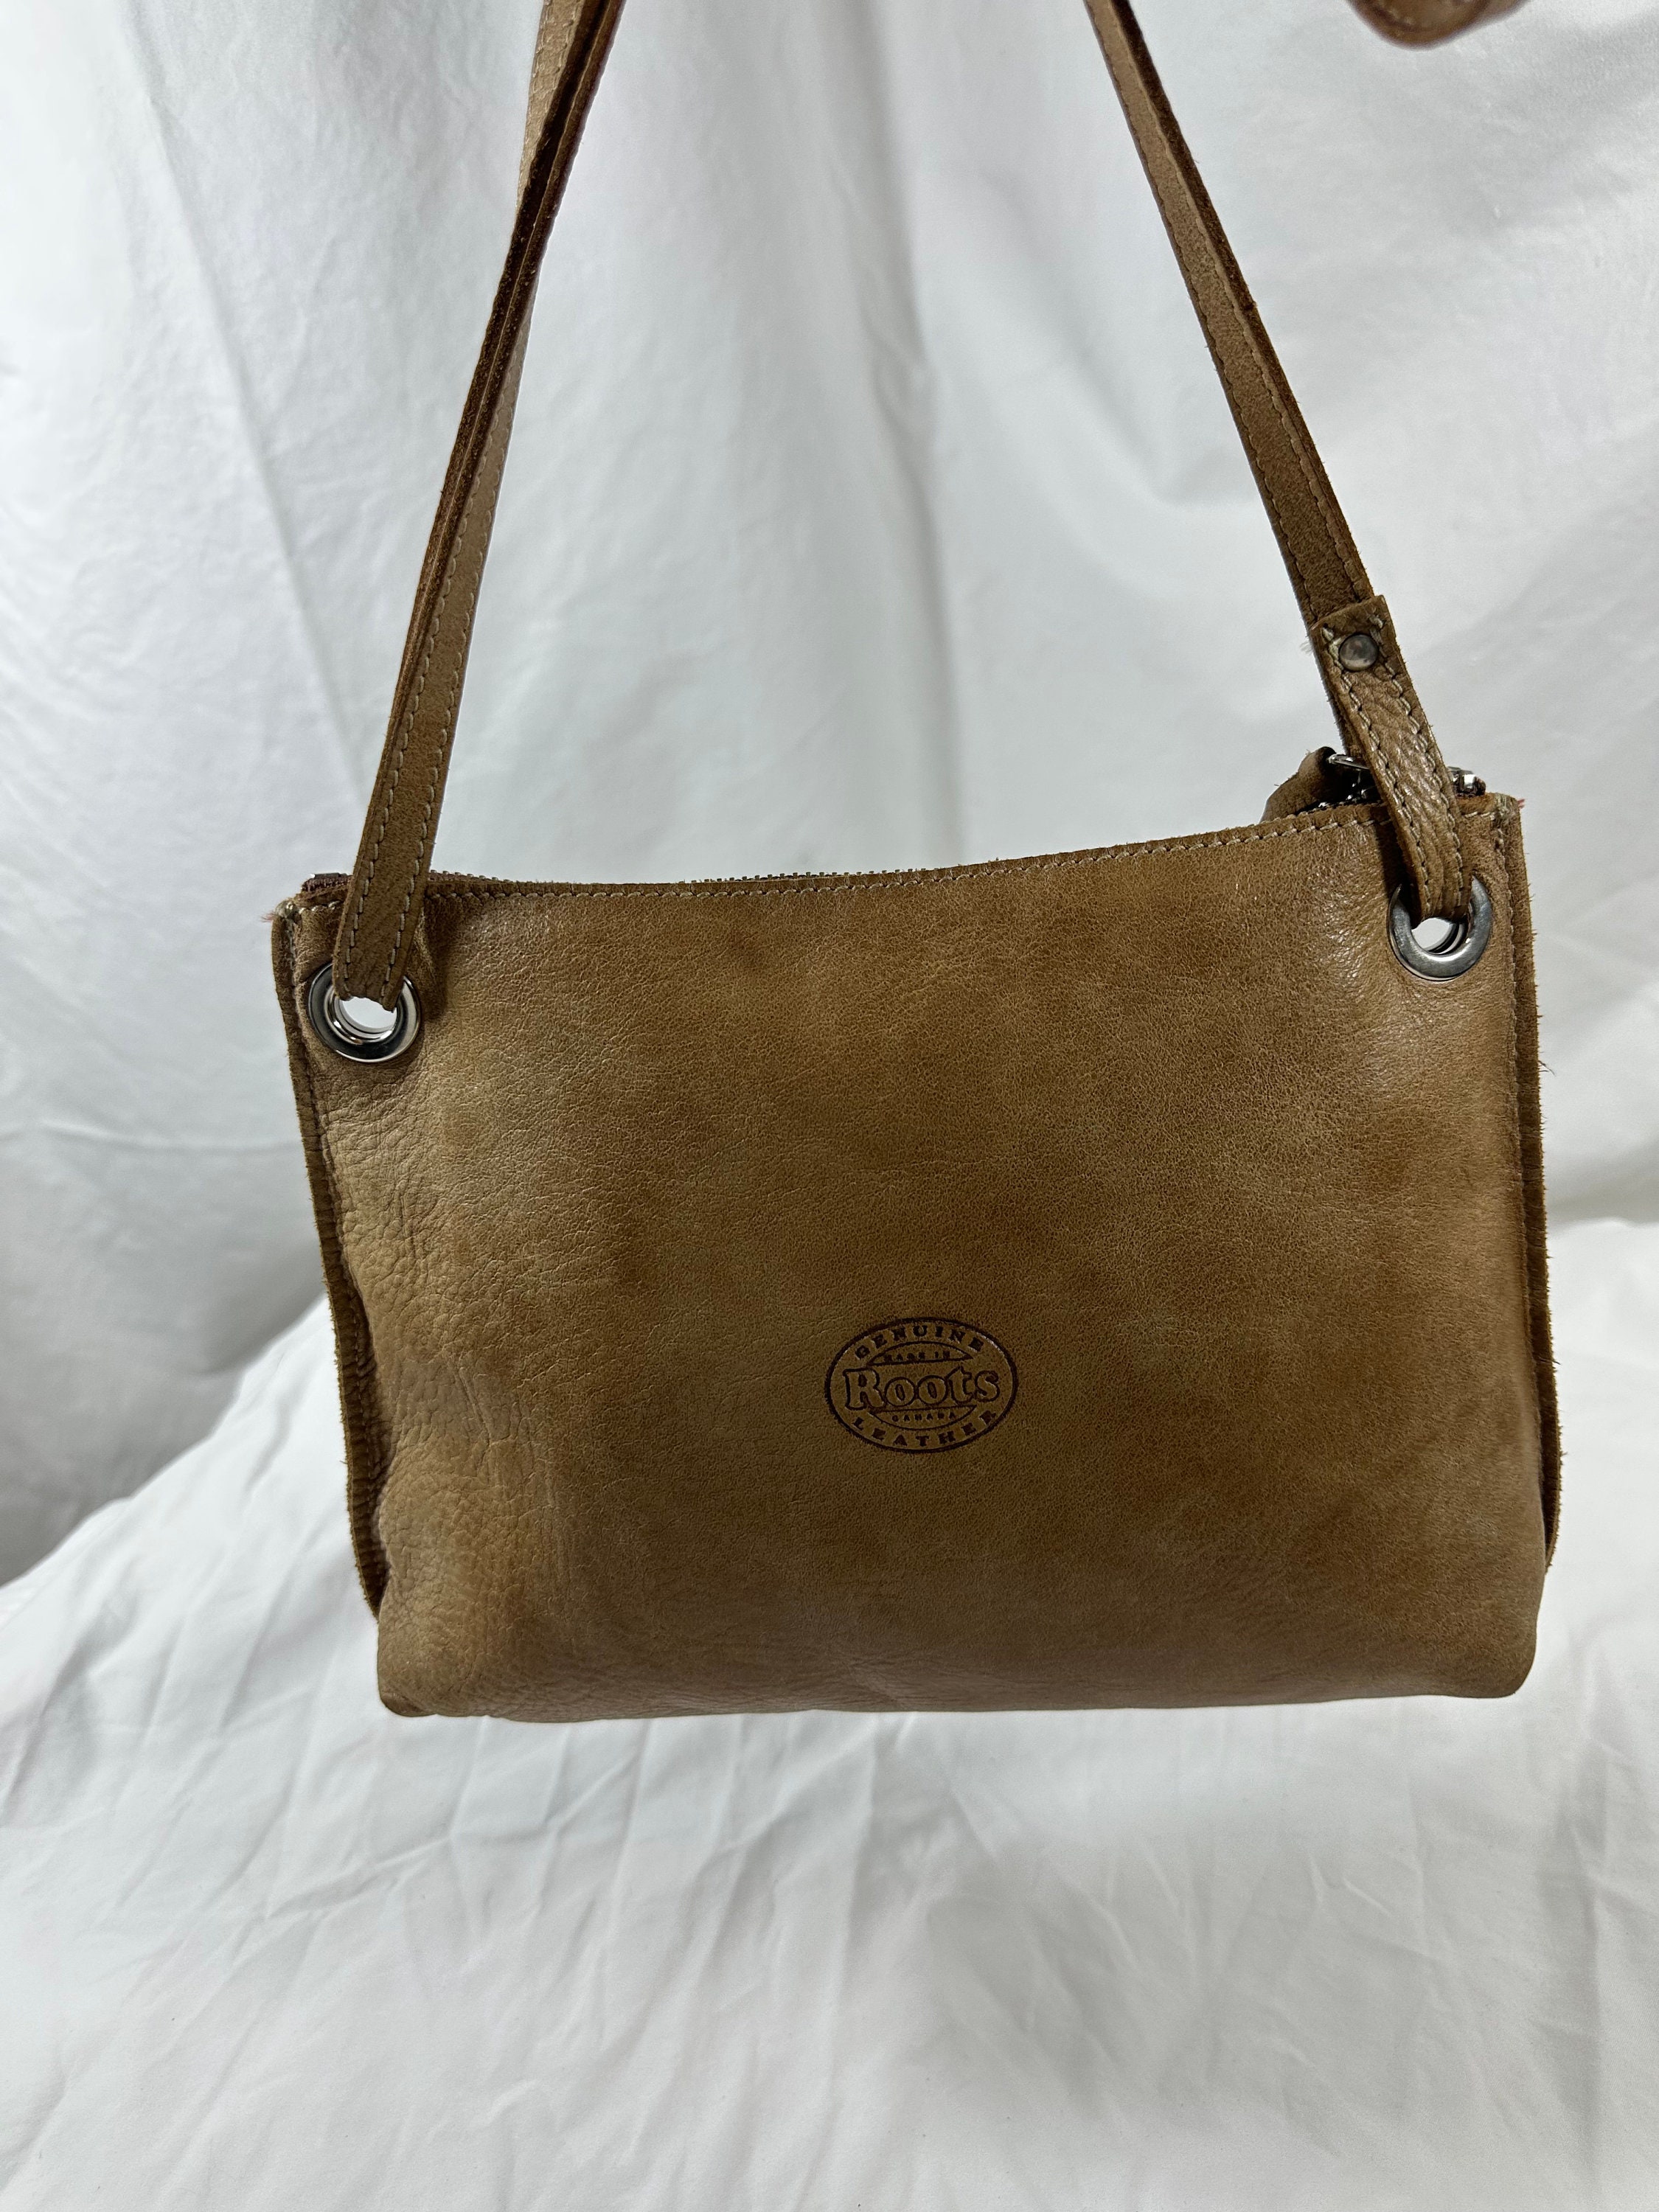 Georgetown University Purse, Georgetown Hoyas Tote Bags, Handbags, Clutches  | shop.guhoyas.com